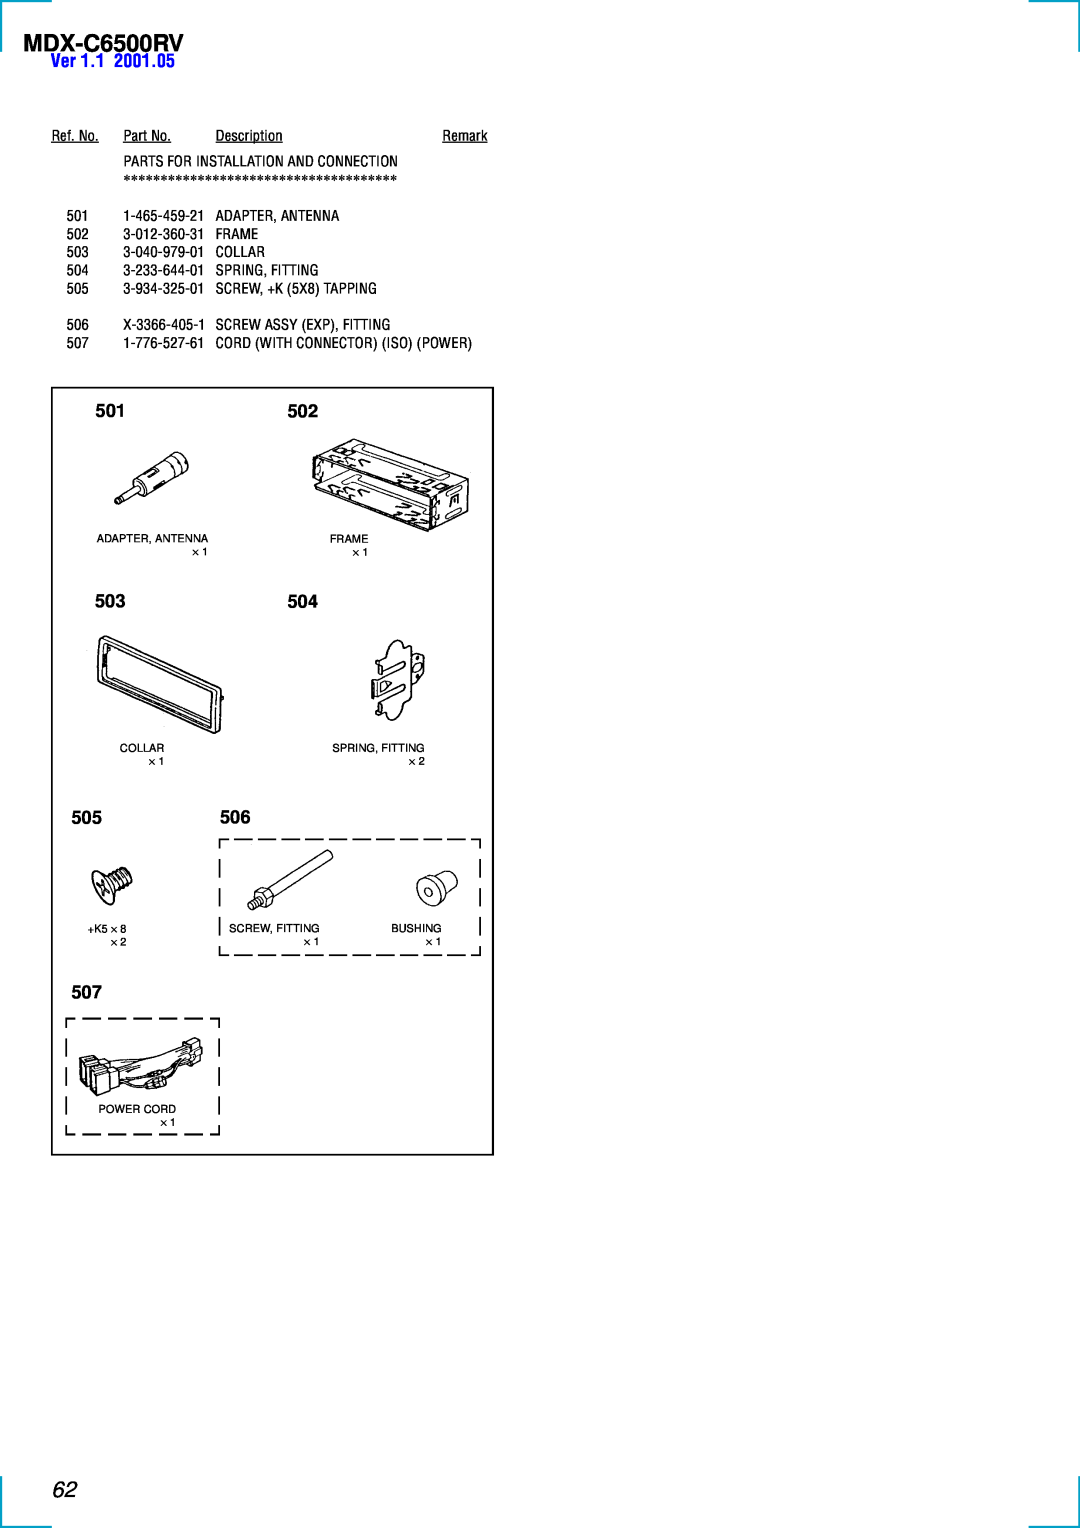 Sony MDX-C6500RV service manual 501502, 503504, 505506, Ver 